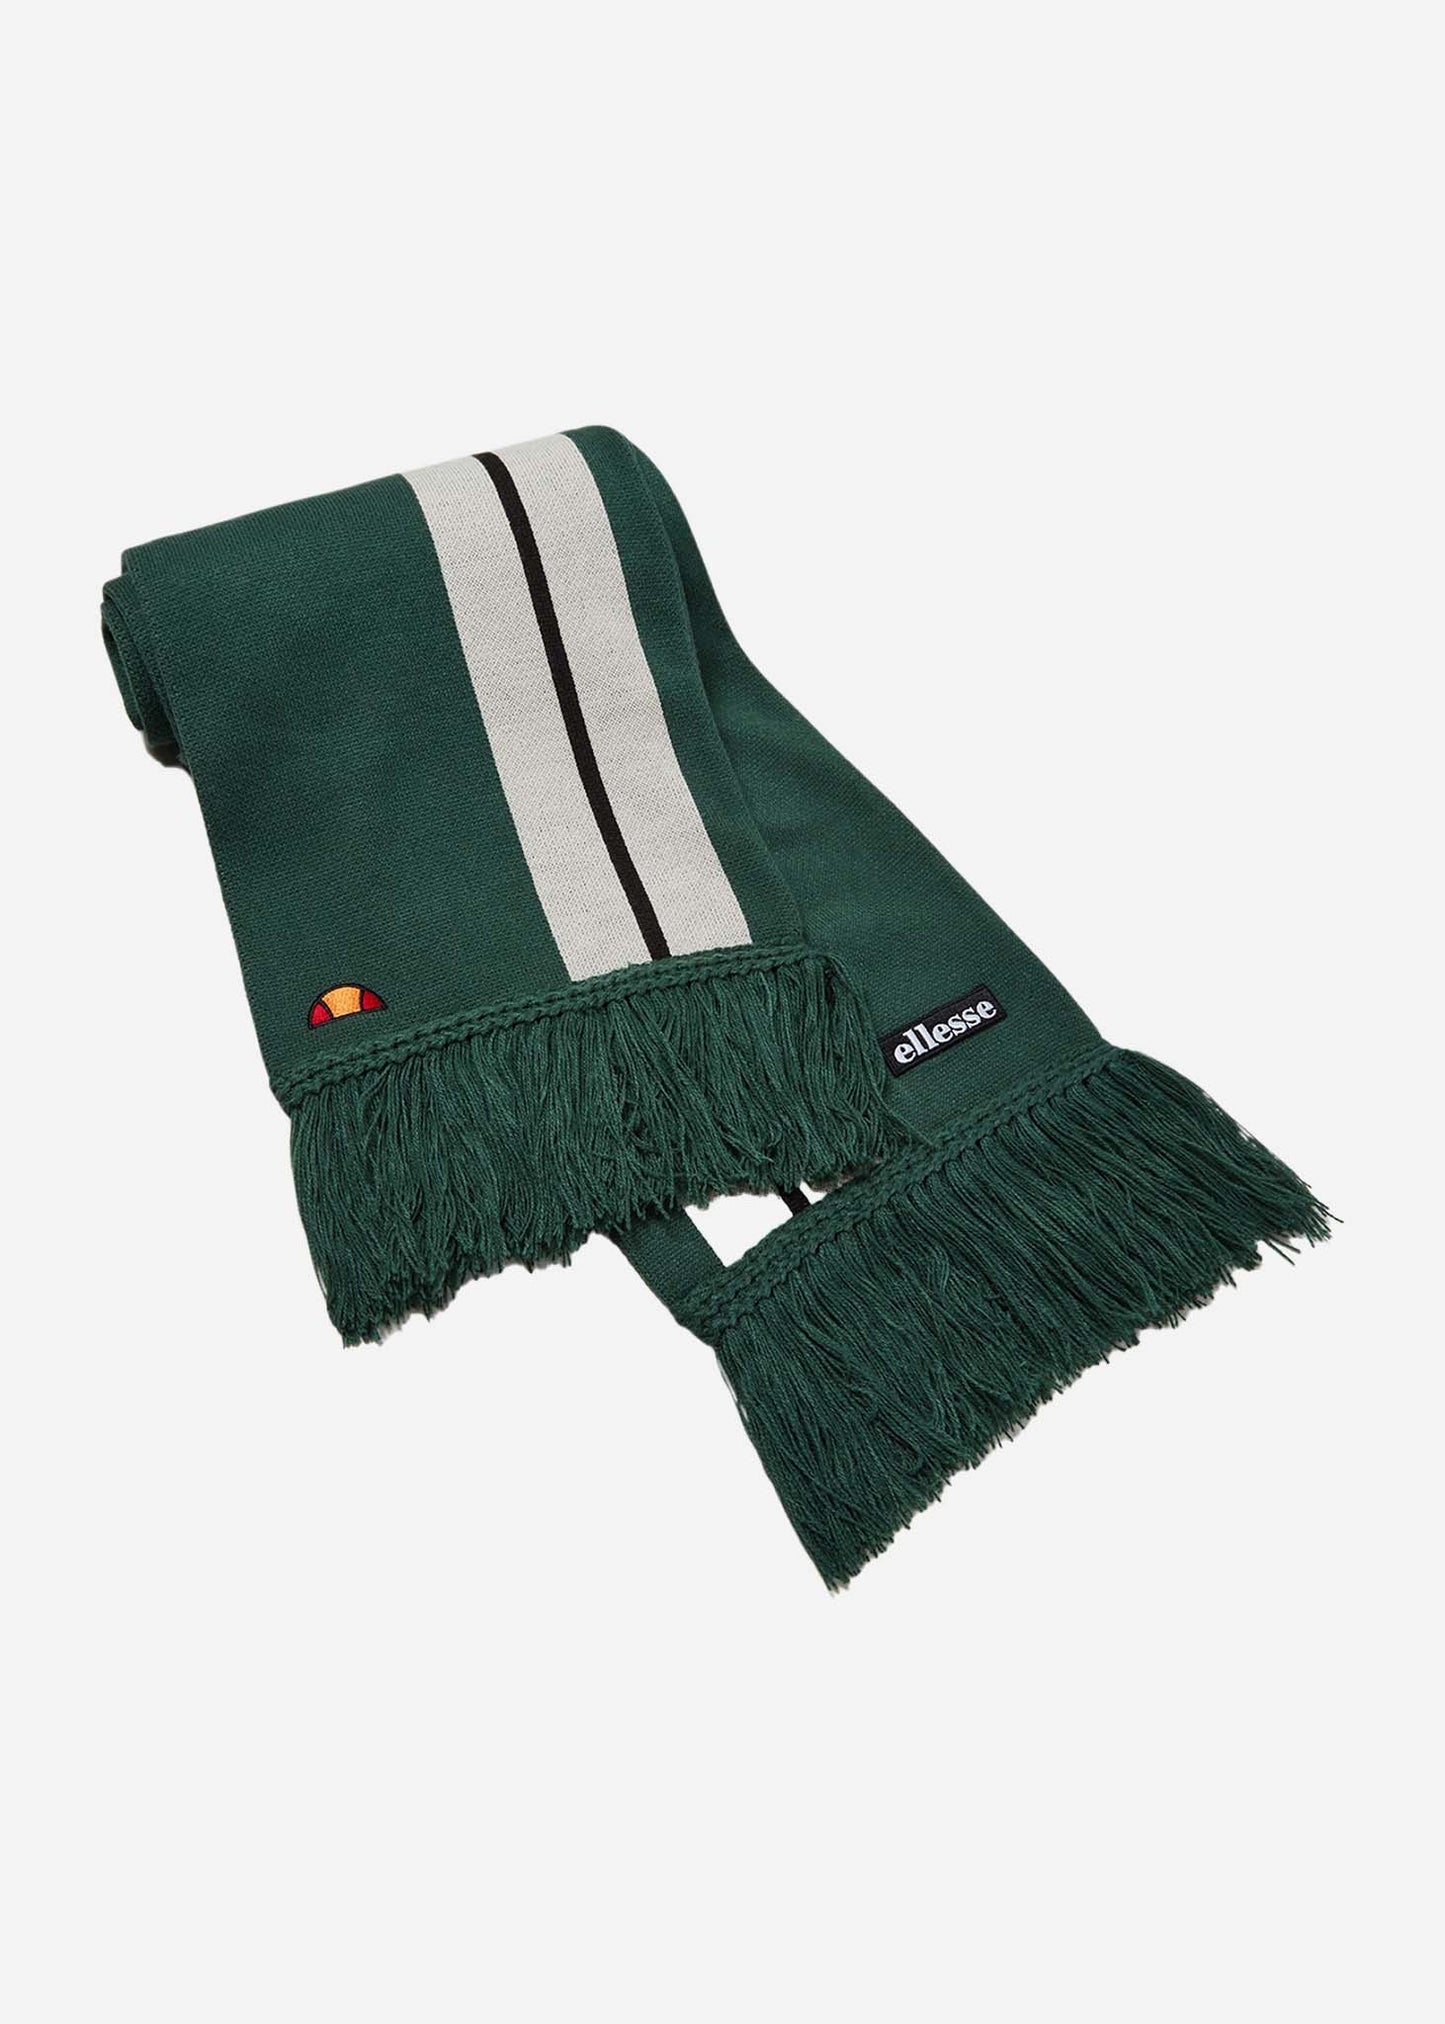 Benni scarf - dark green